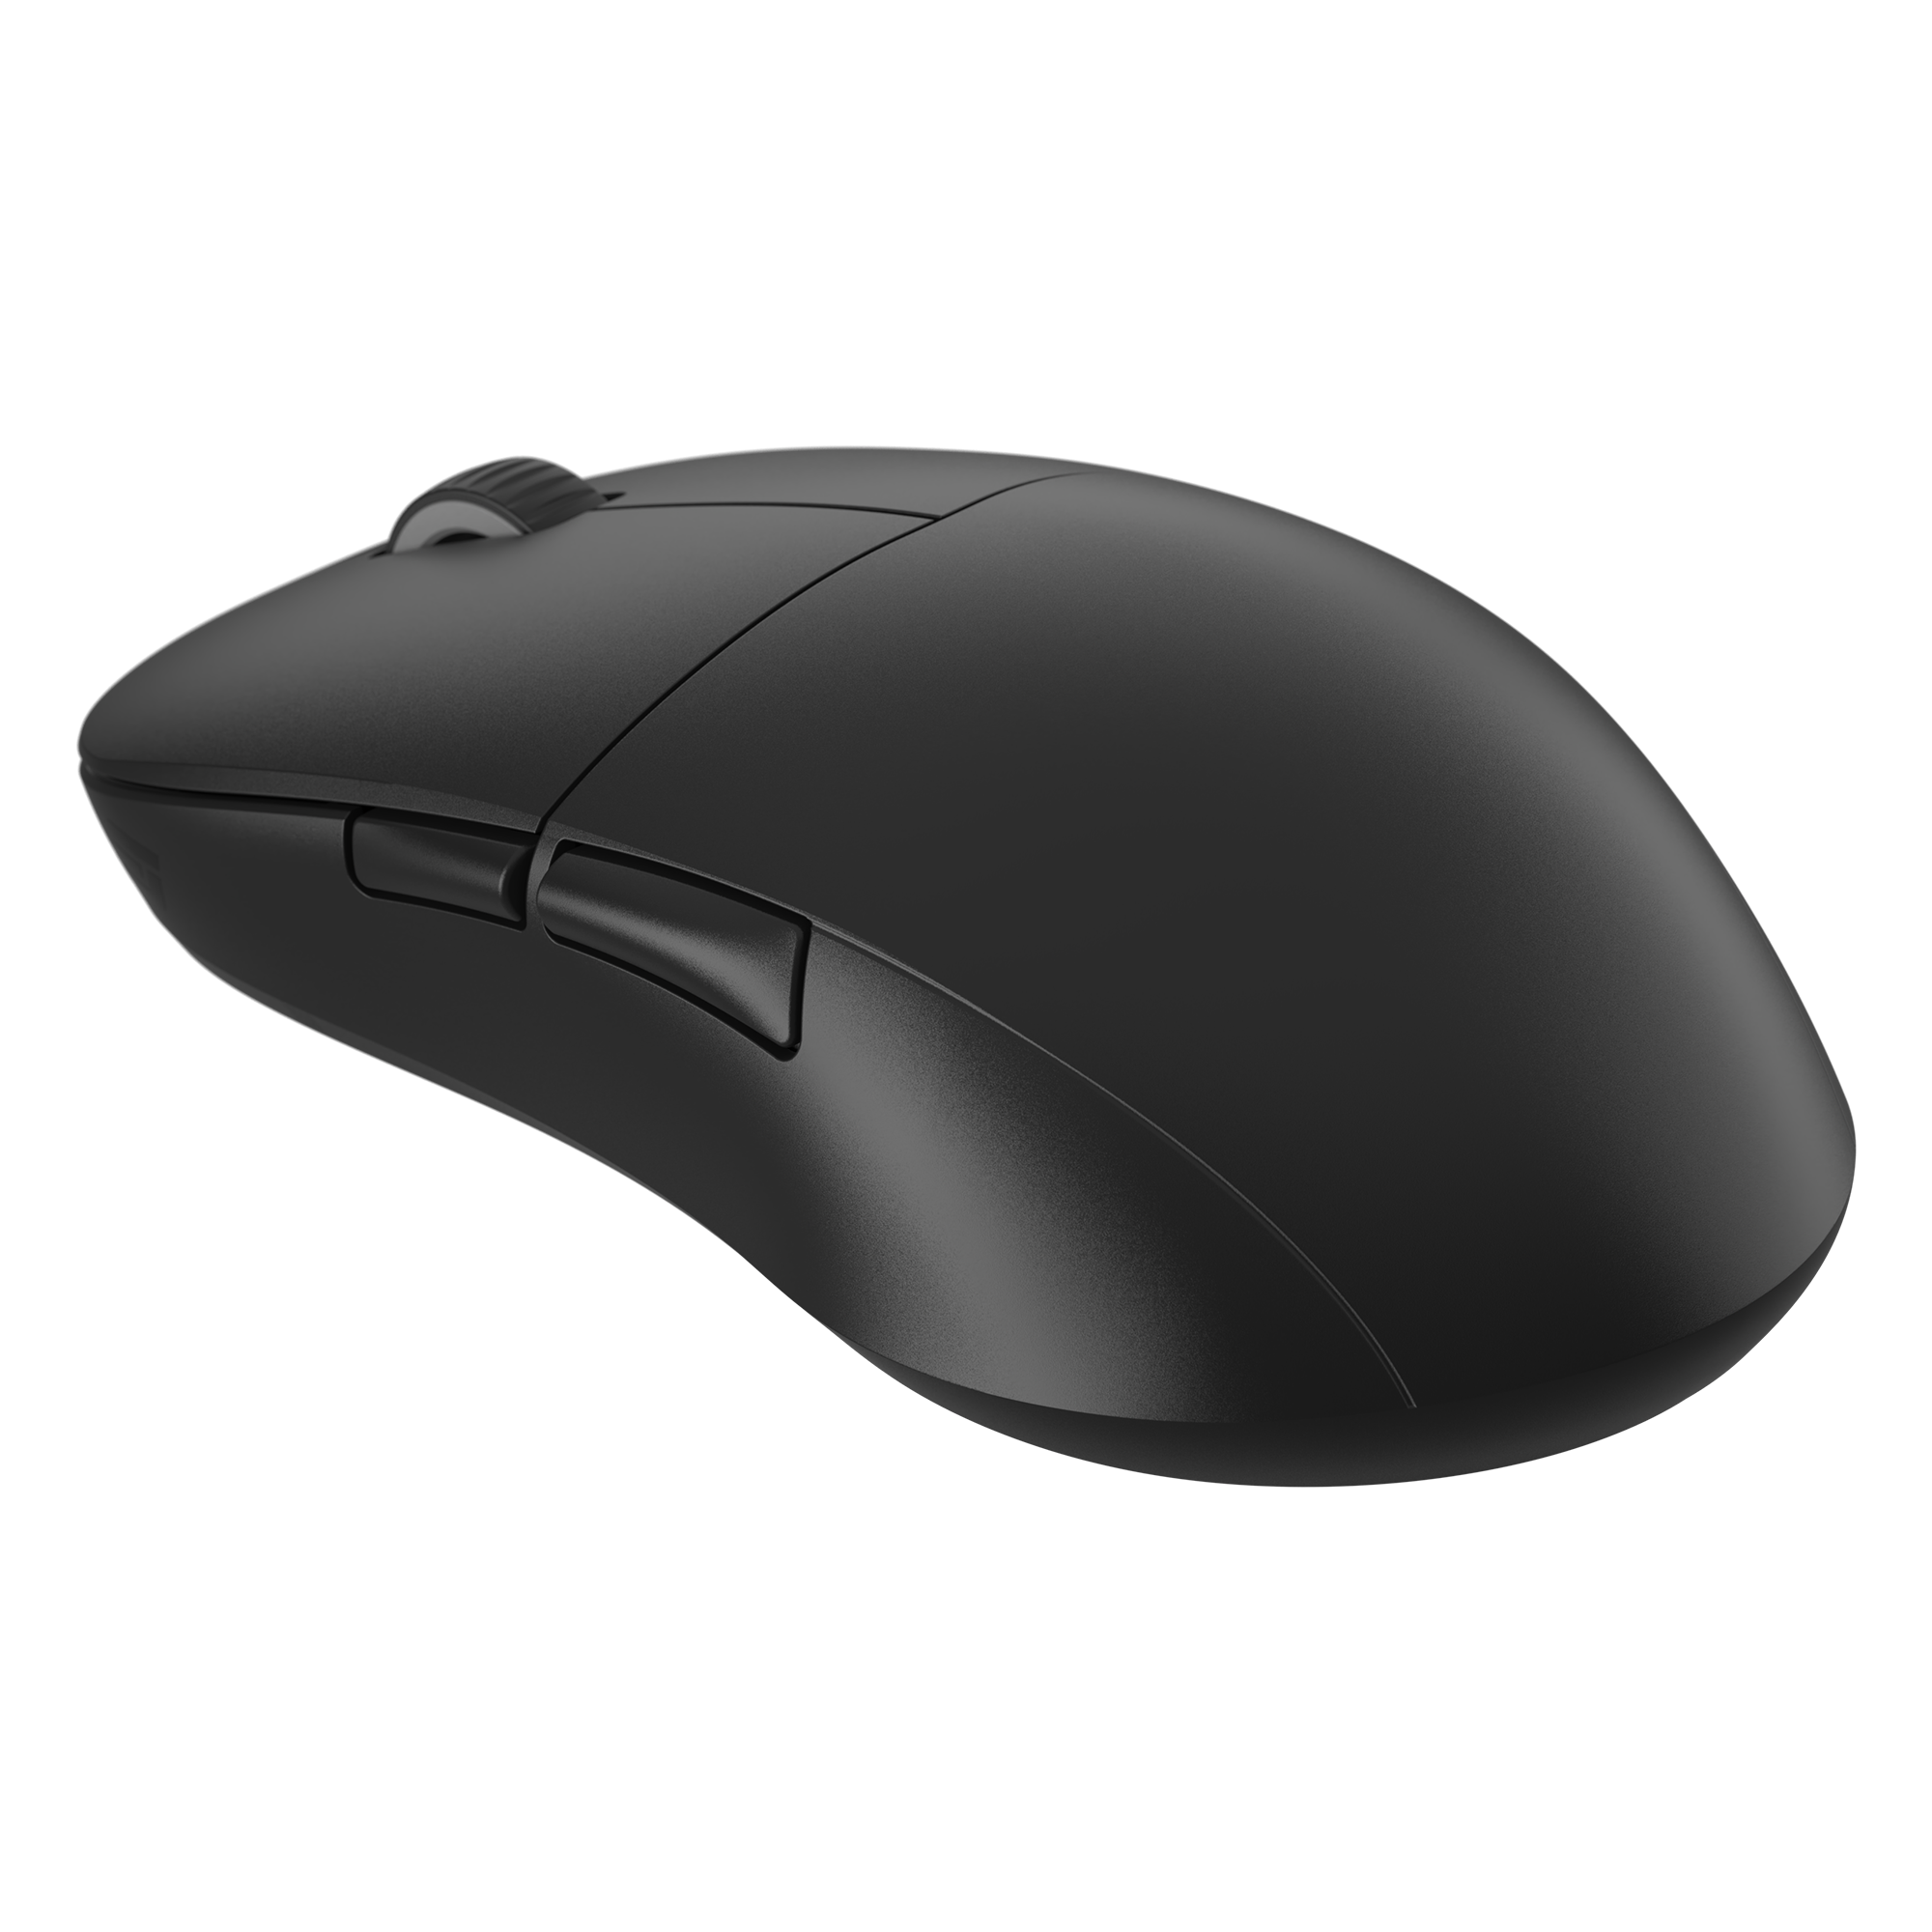 Endgame Gear XM2we mouse